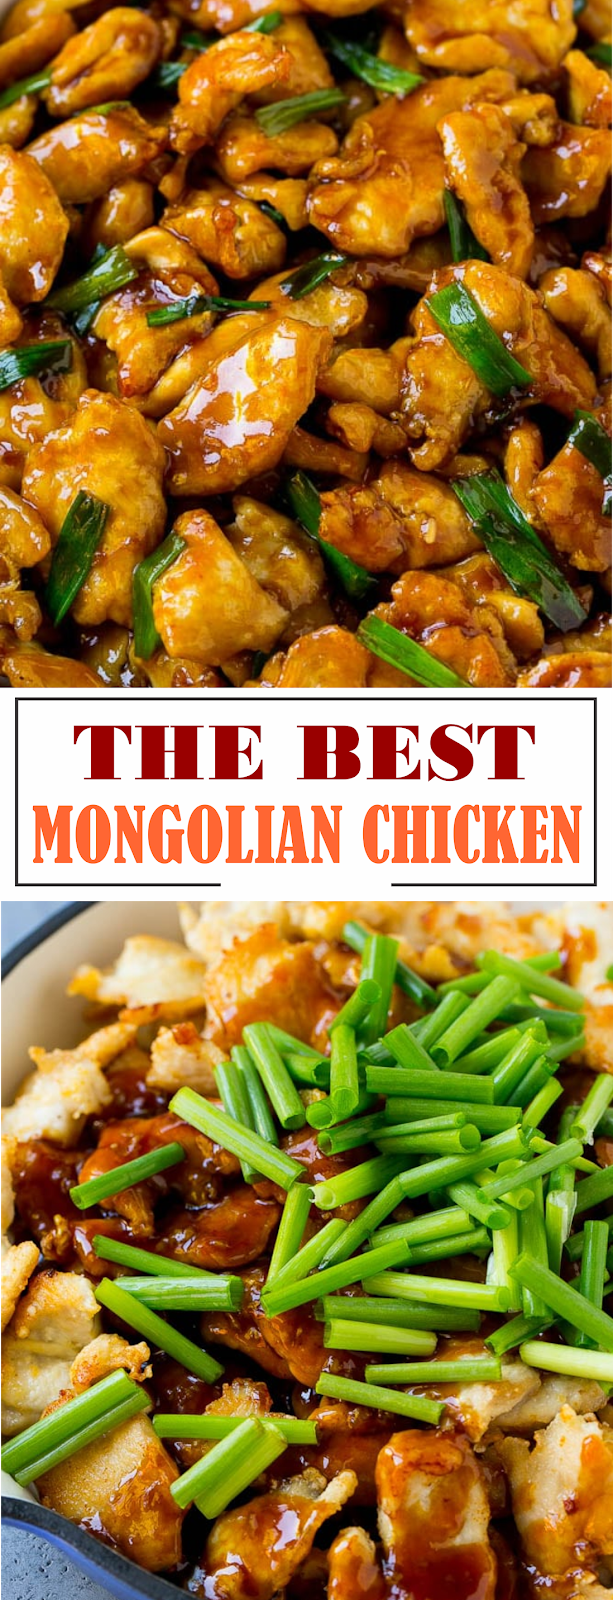 THE BEST MONGOLIAN CHICKEN | EAT